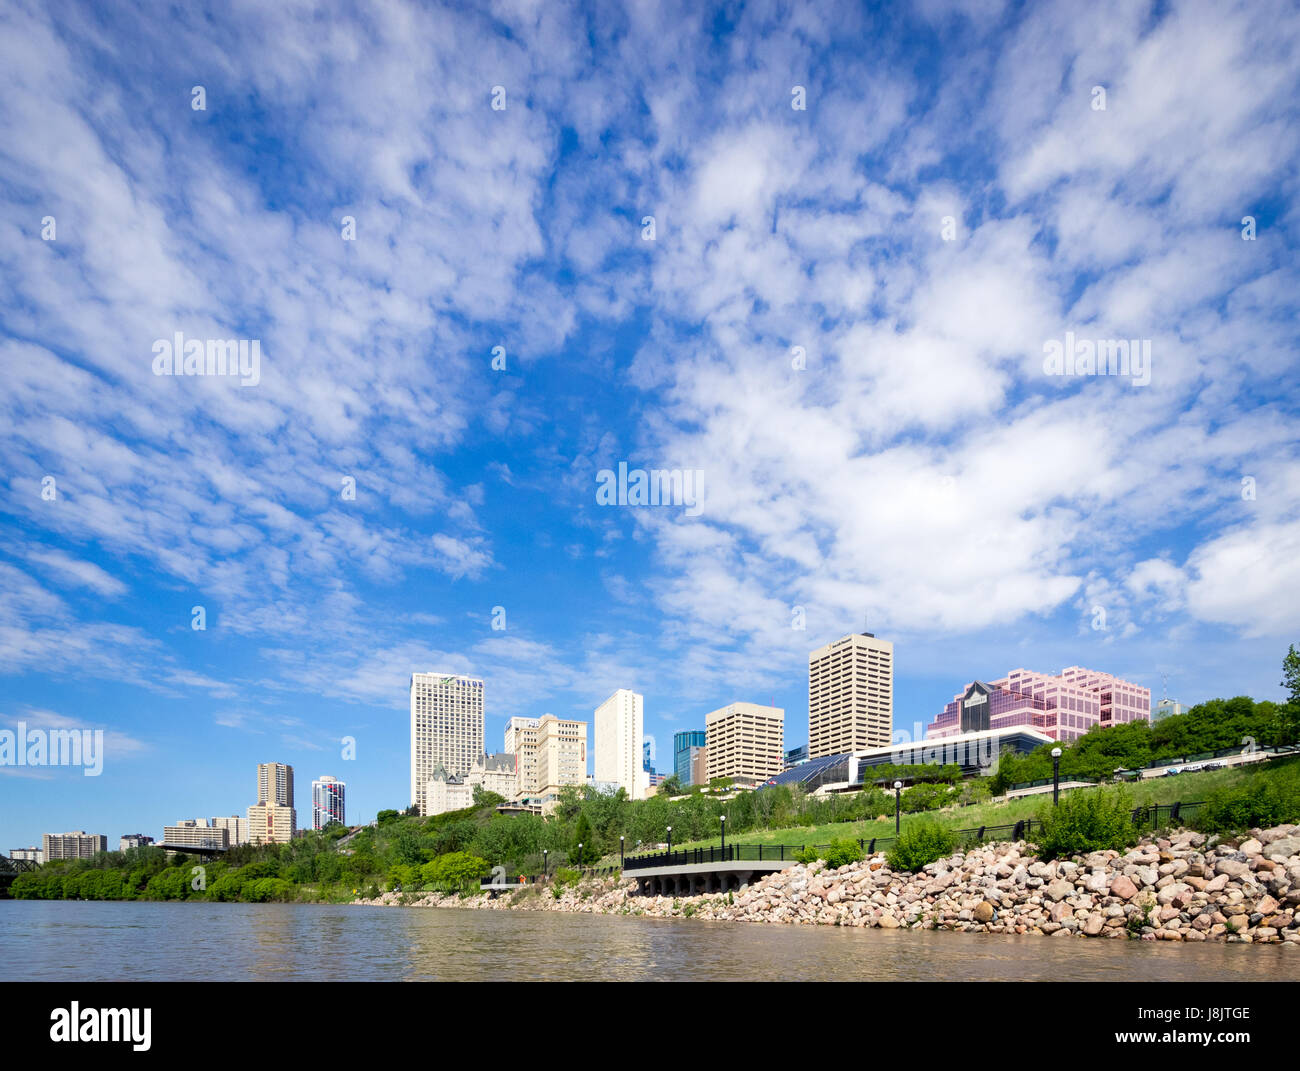 The skyline of Edmonton, Alberta, Canada, as seen from the North Saskatchewan River. Stock Photo